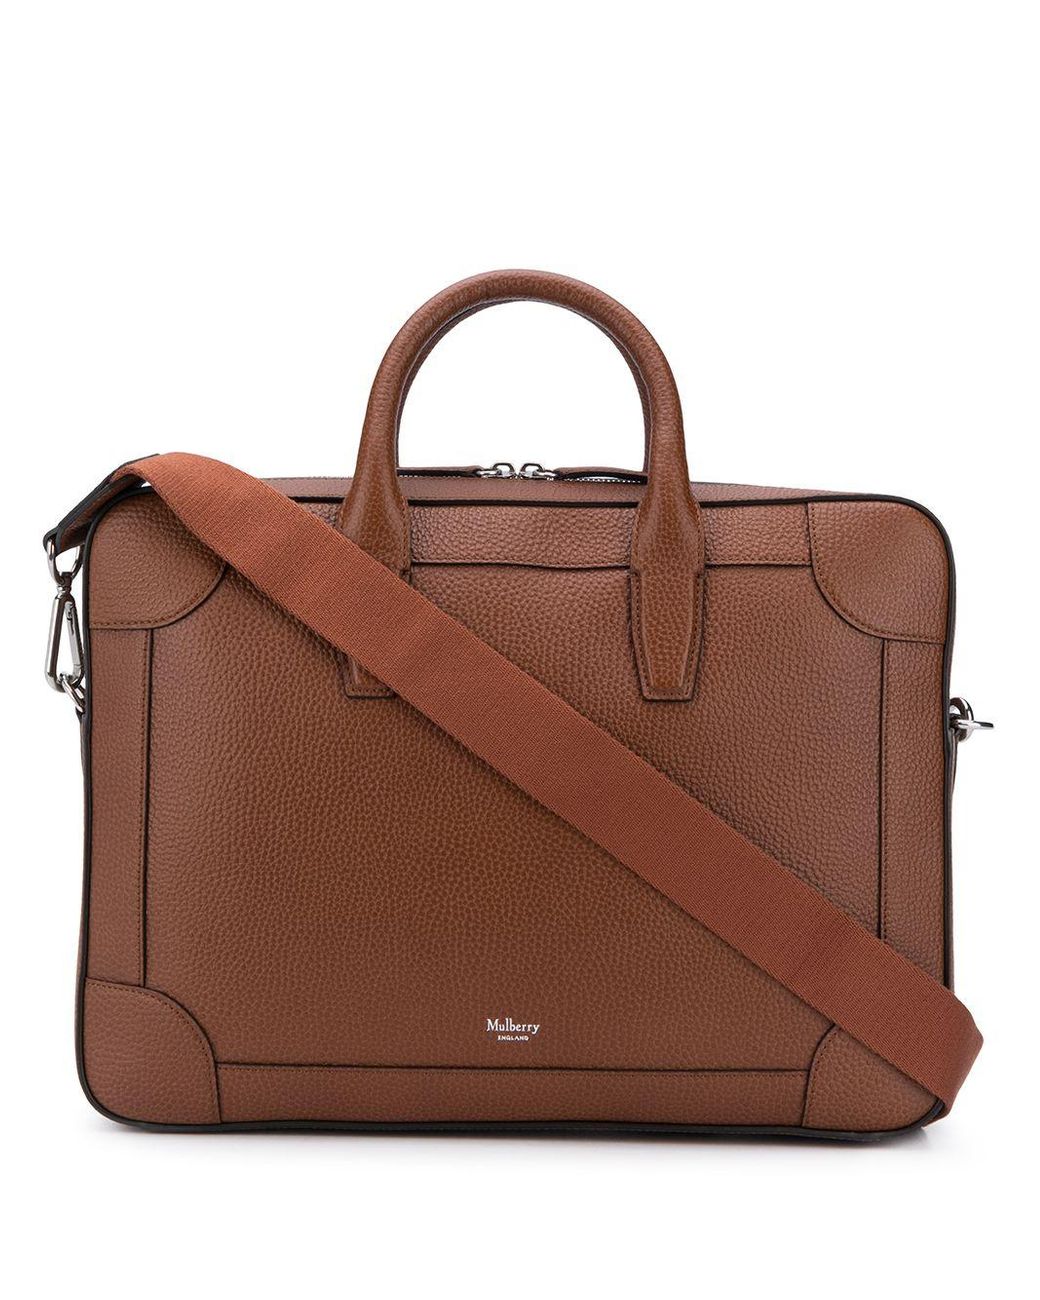 Mulberry Belgrave Logo Laptop Bag in Brown for Men - Lyst